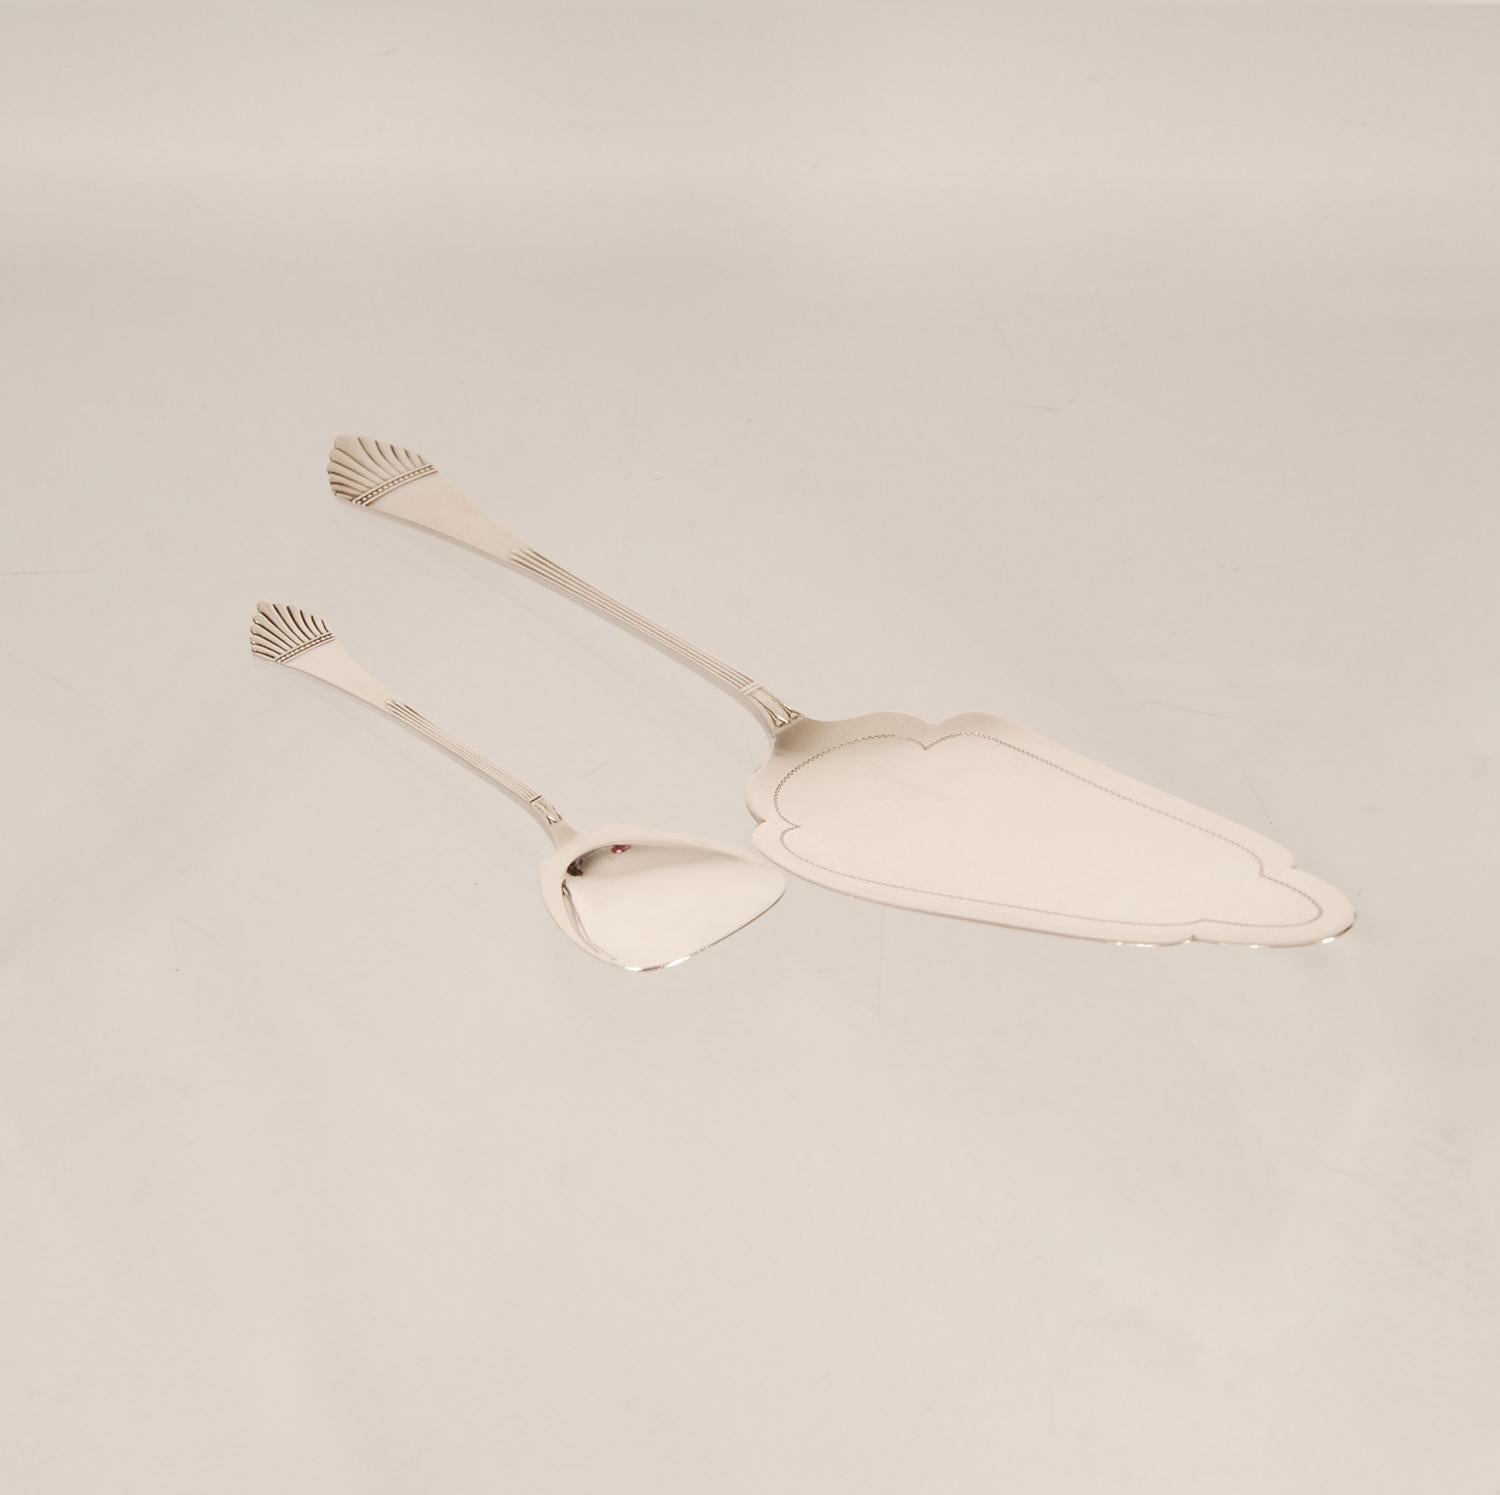 Art Deco Sterling Silver Flatware 1920s Spoons, Forks, Cake Server Set 31 Pieces 8